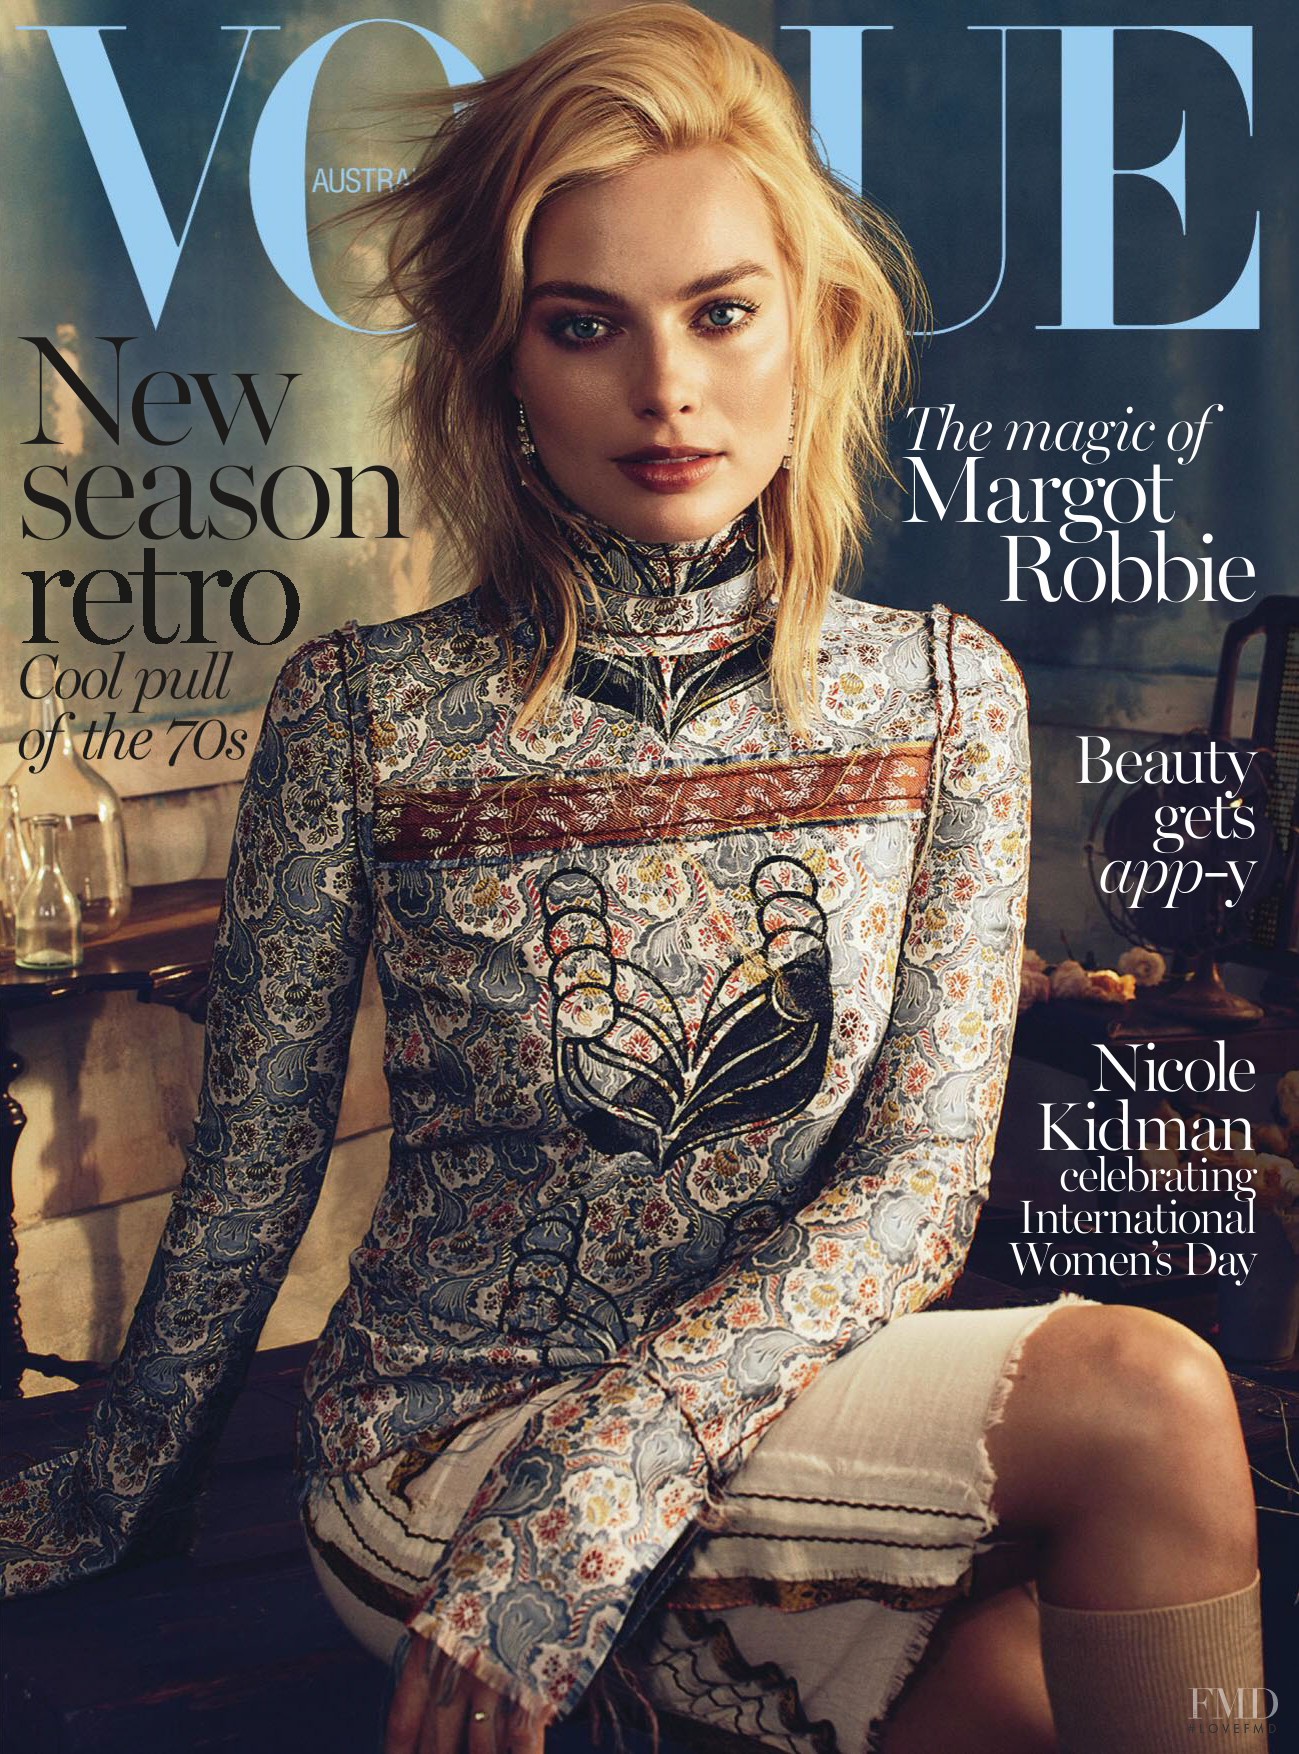 Margot Robbie Cover ~ Margot Robbie Elle Australia 2019 Cover Photoshoot Showtainment